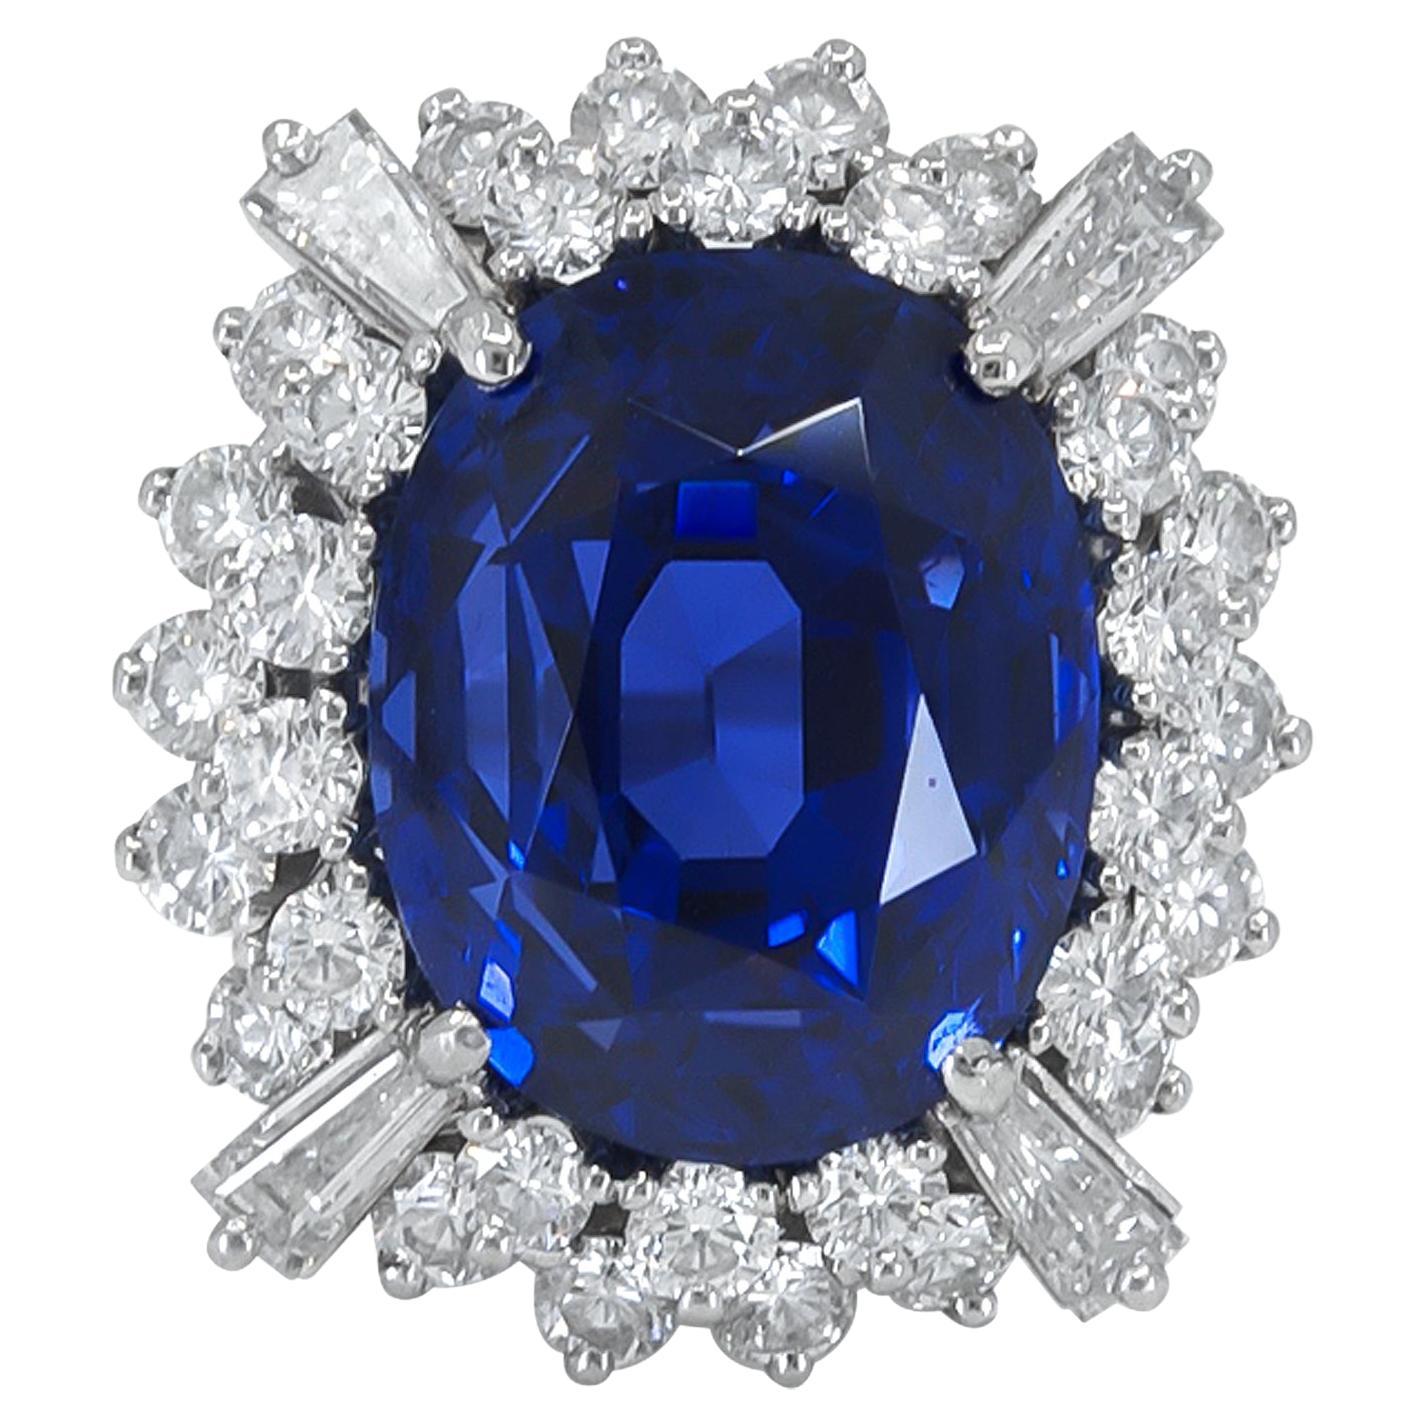 Spectra Fine Jewelry Certified 19.28 Carat Ceylon Sapphire Diamond Ring For Sale